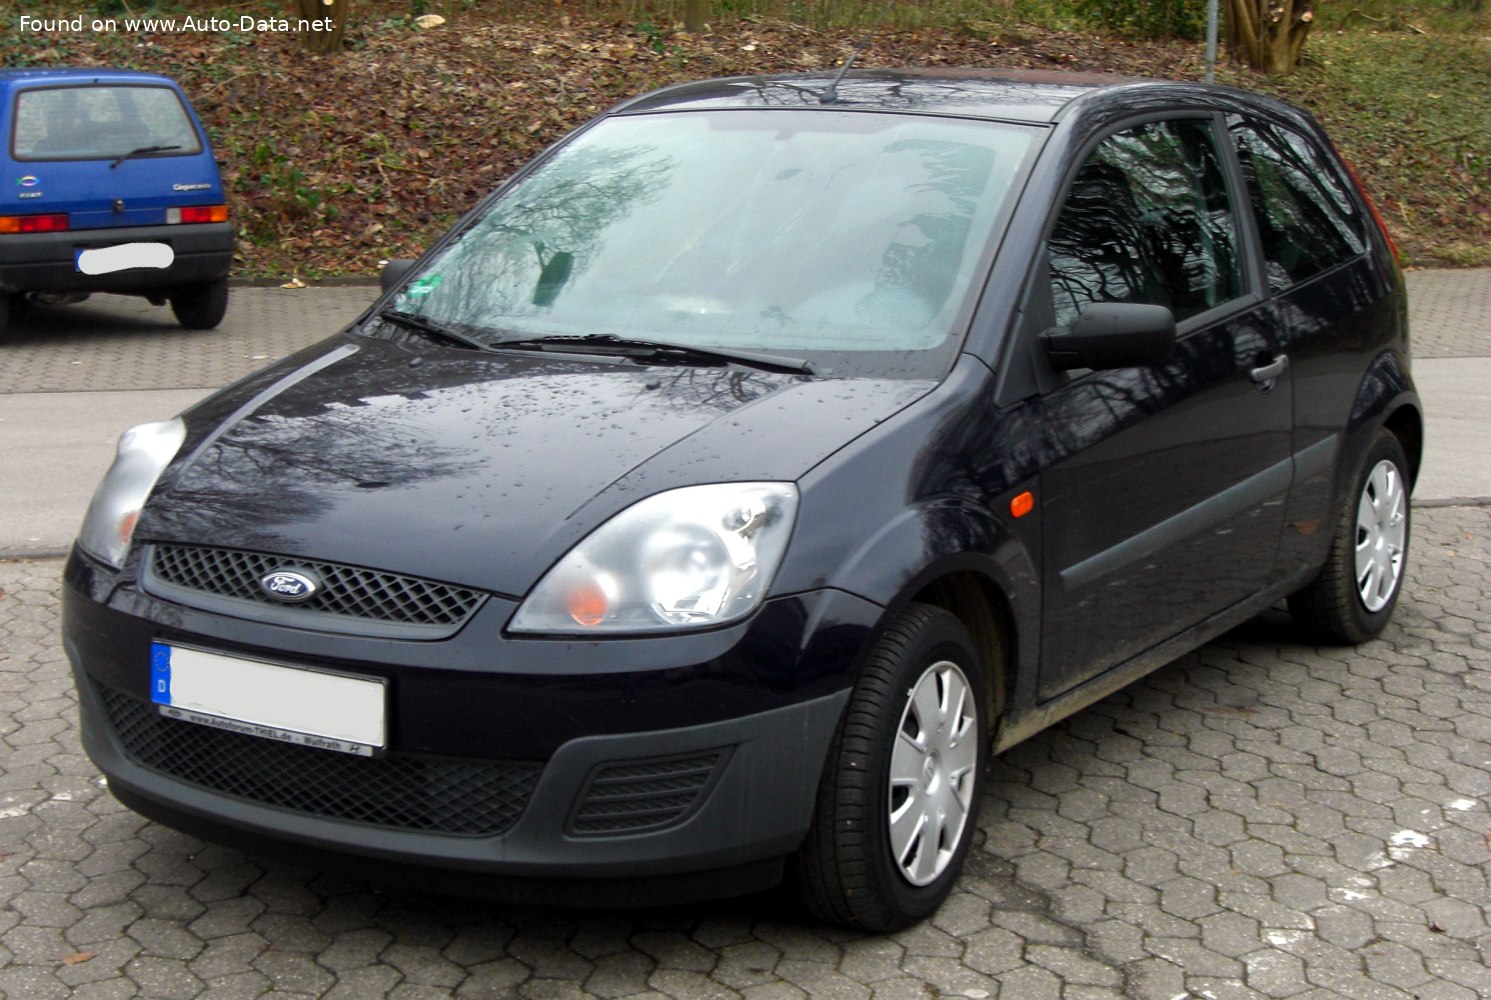 https://www.auto-data.net/images/f33/Ford-Fiesta-Mk6-3-door-facelift-2005.jpg